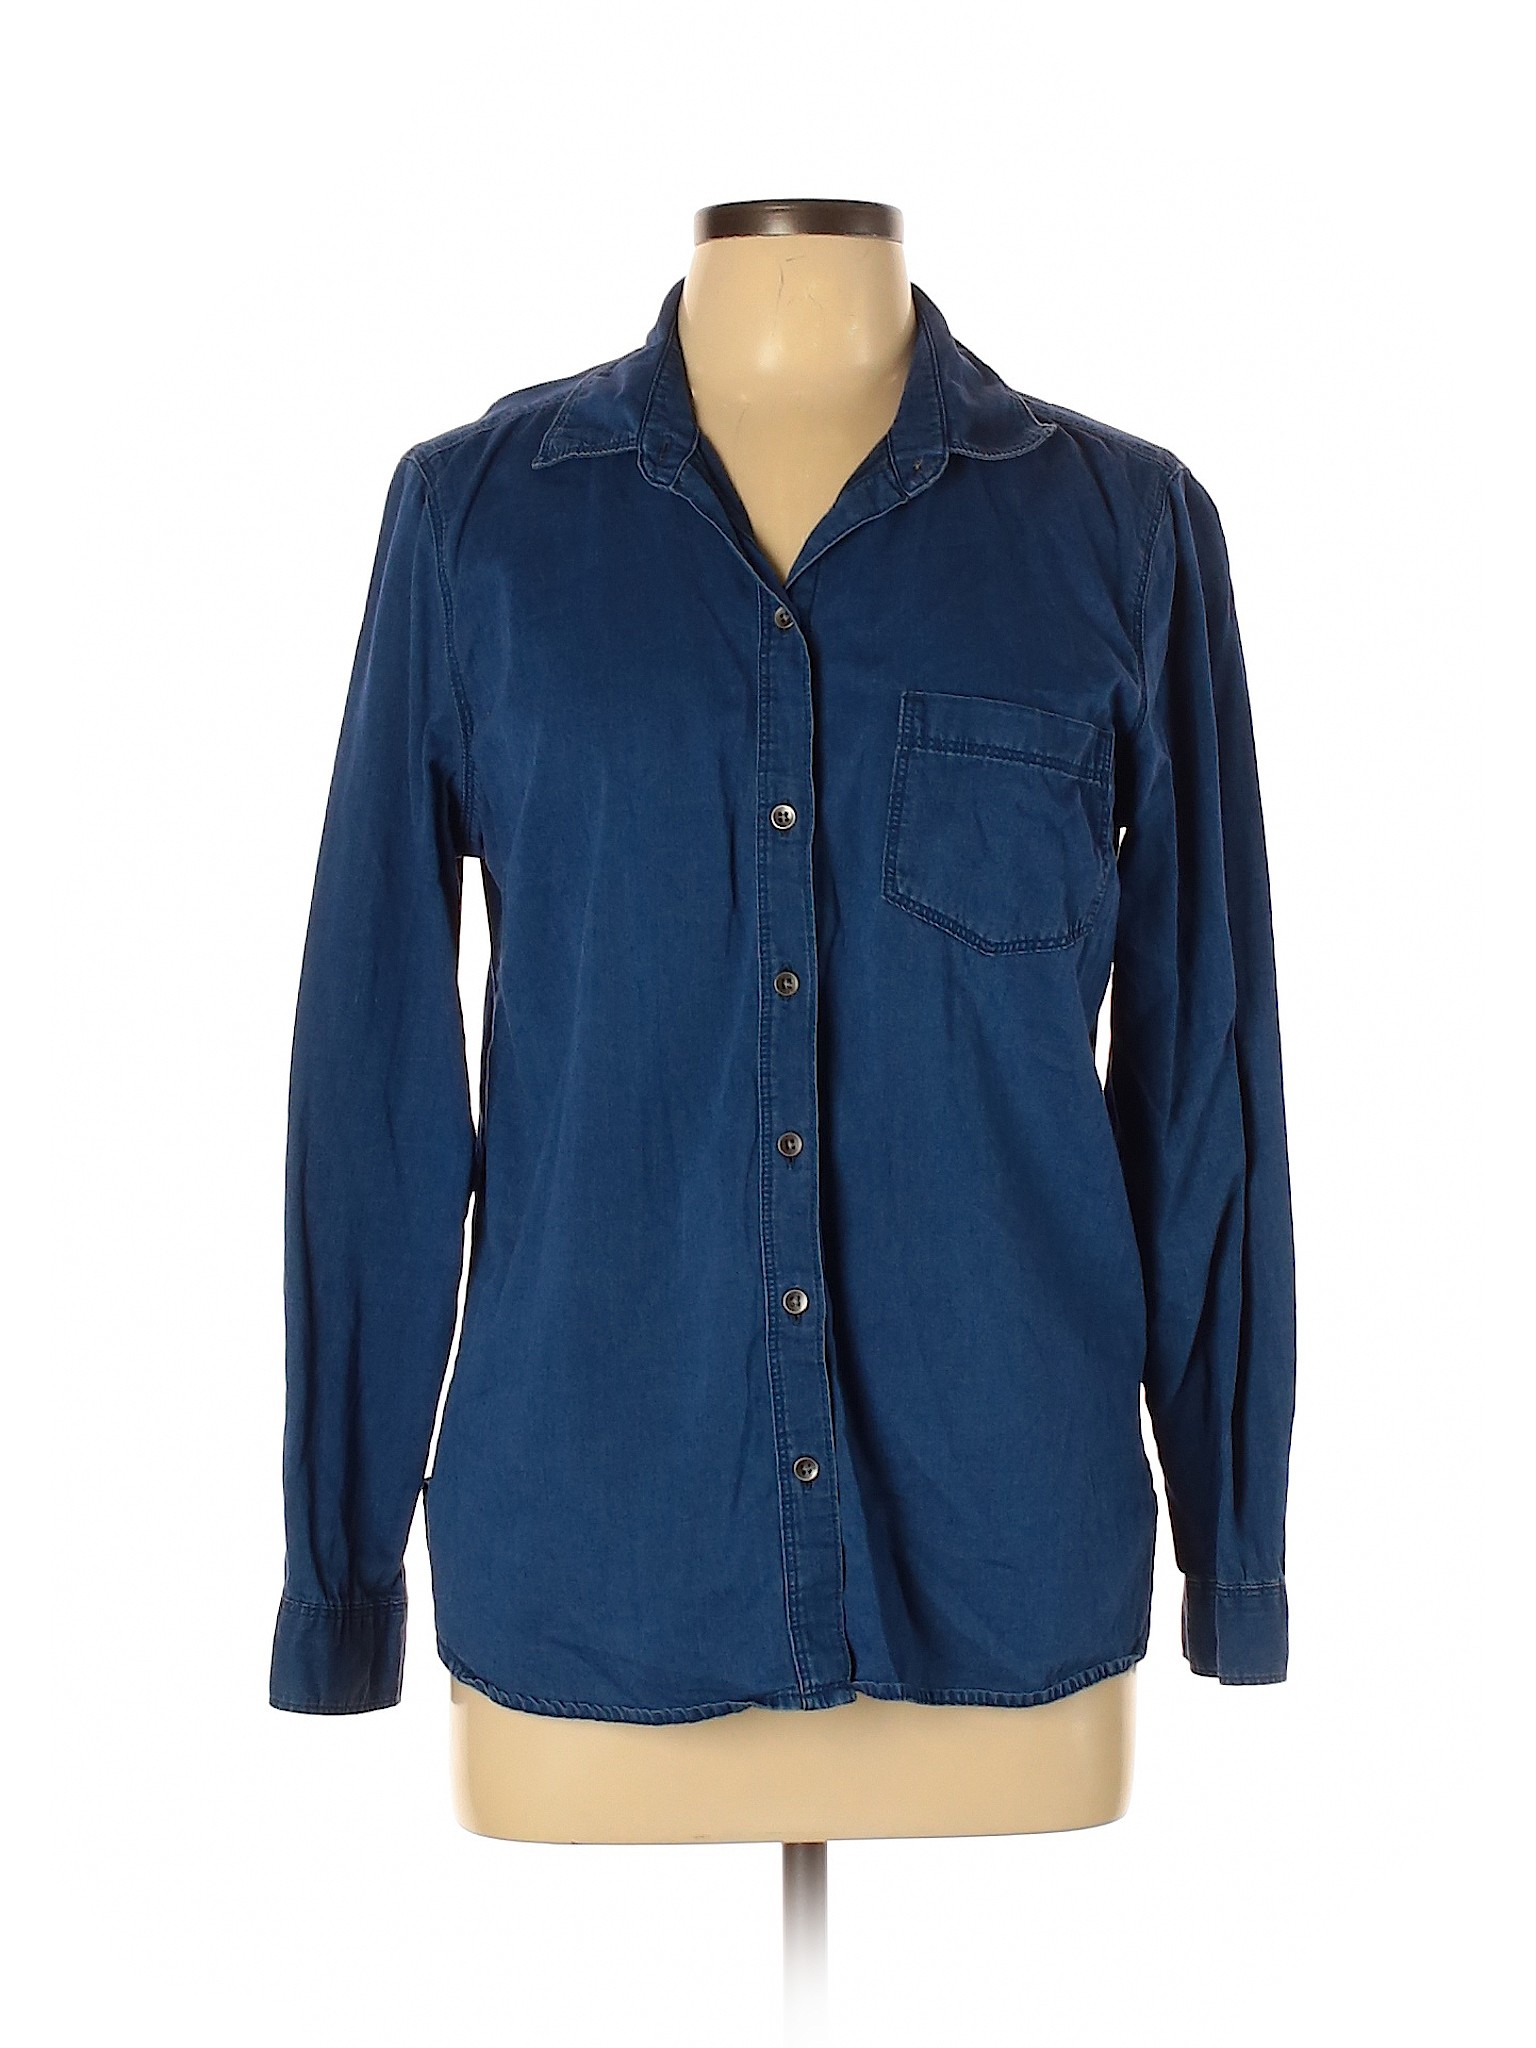 Old Navy Women Blue Long Sleeve Button-Down Shirt L | eBay